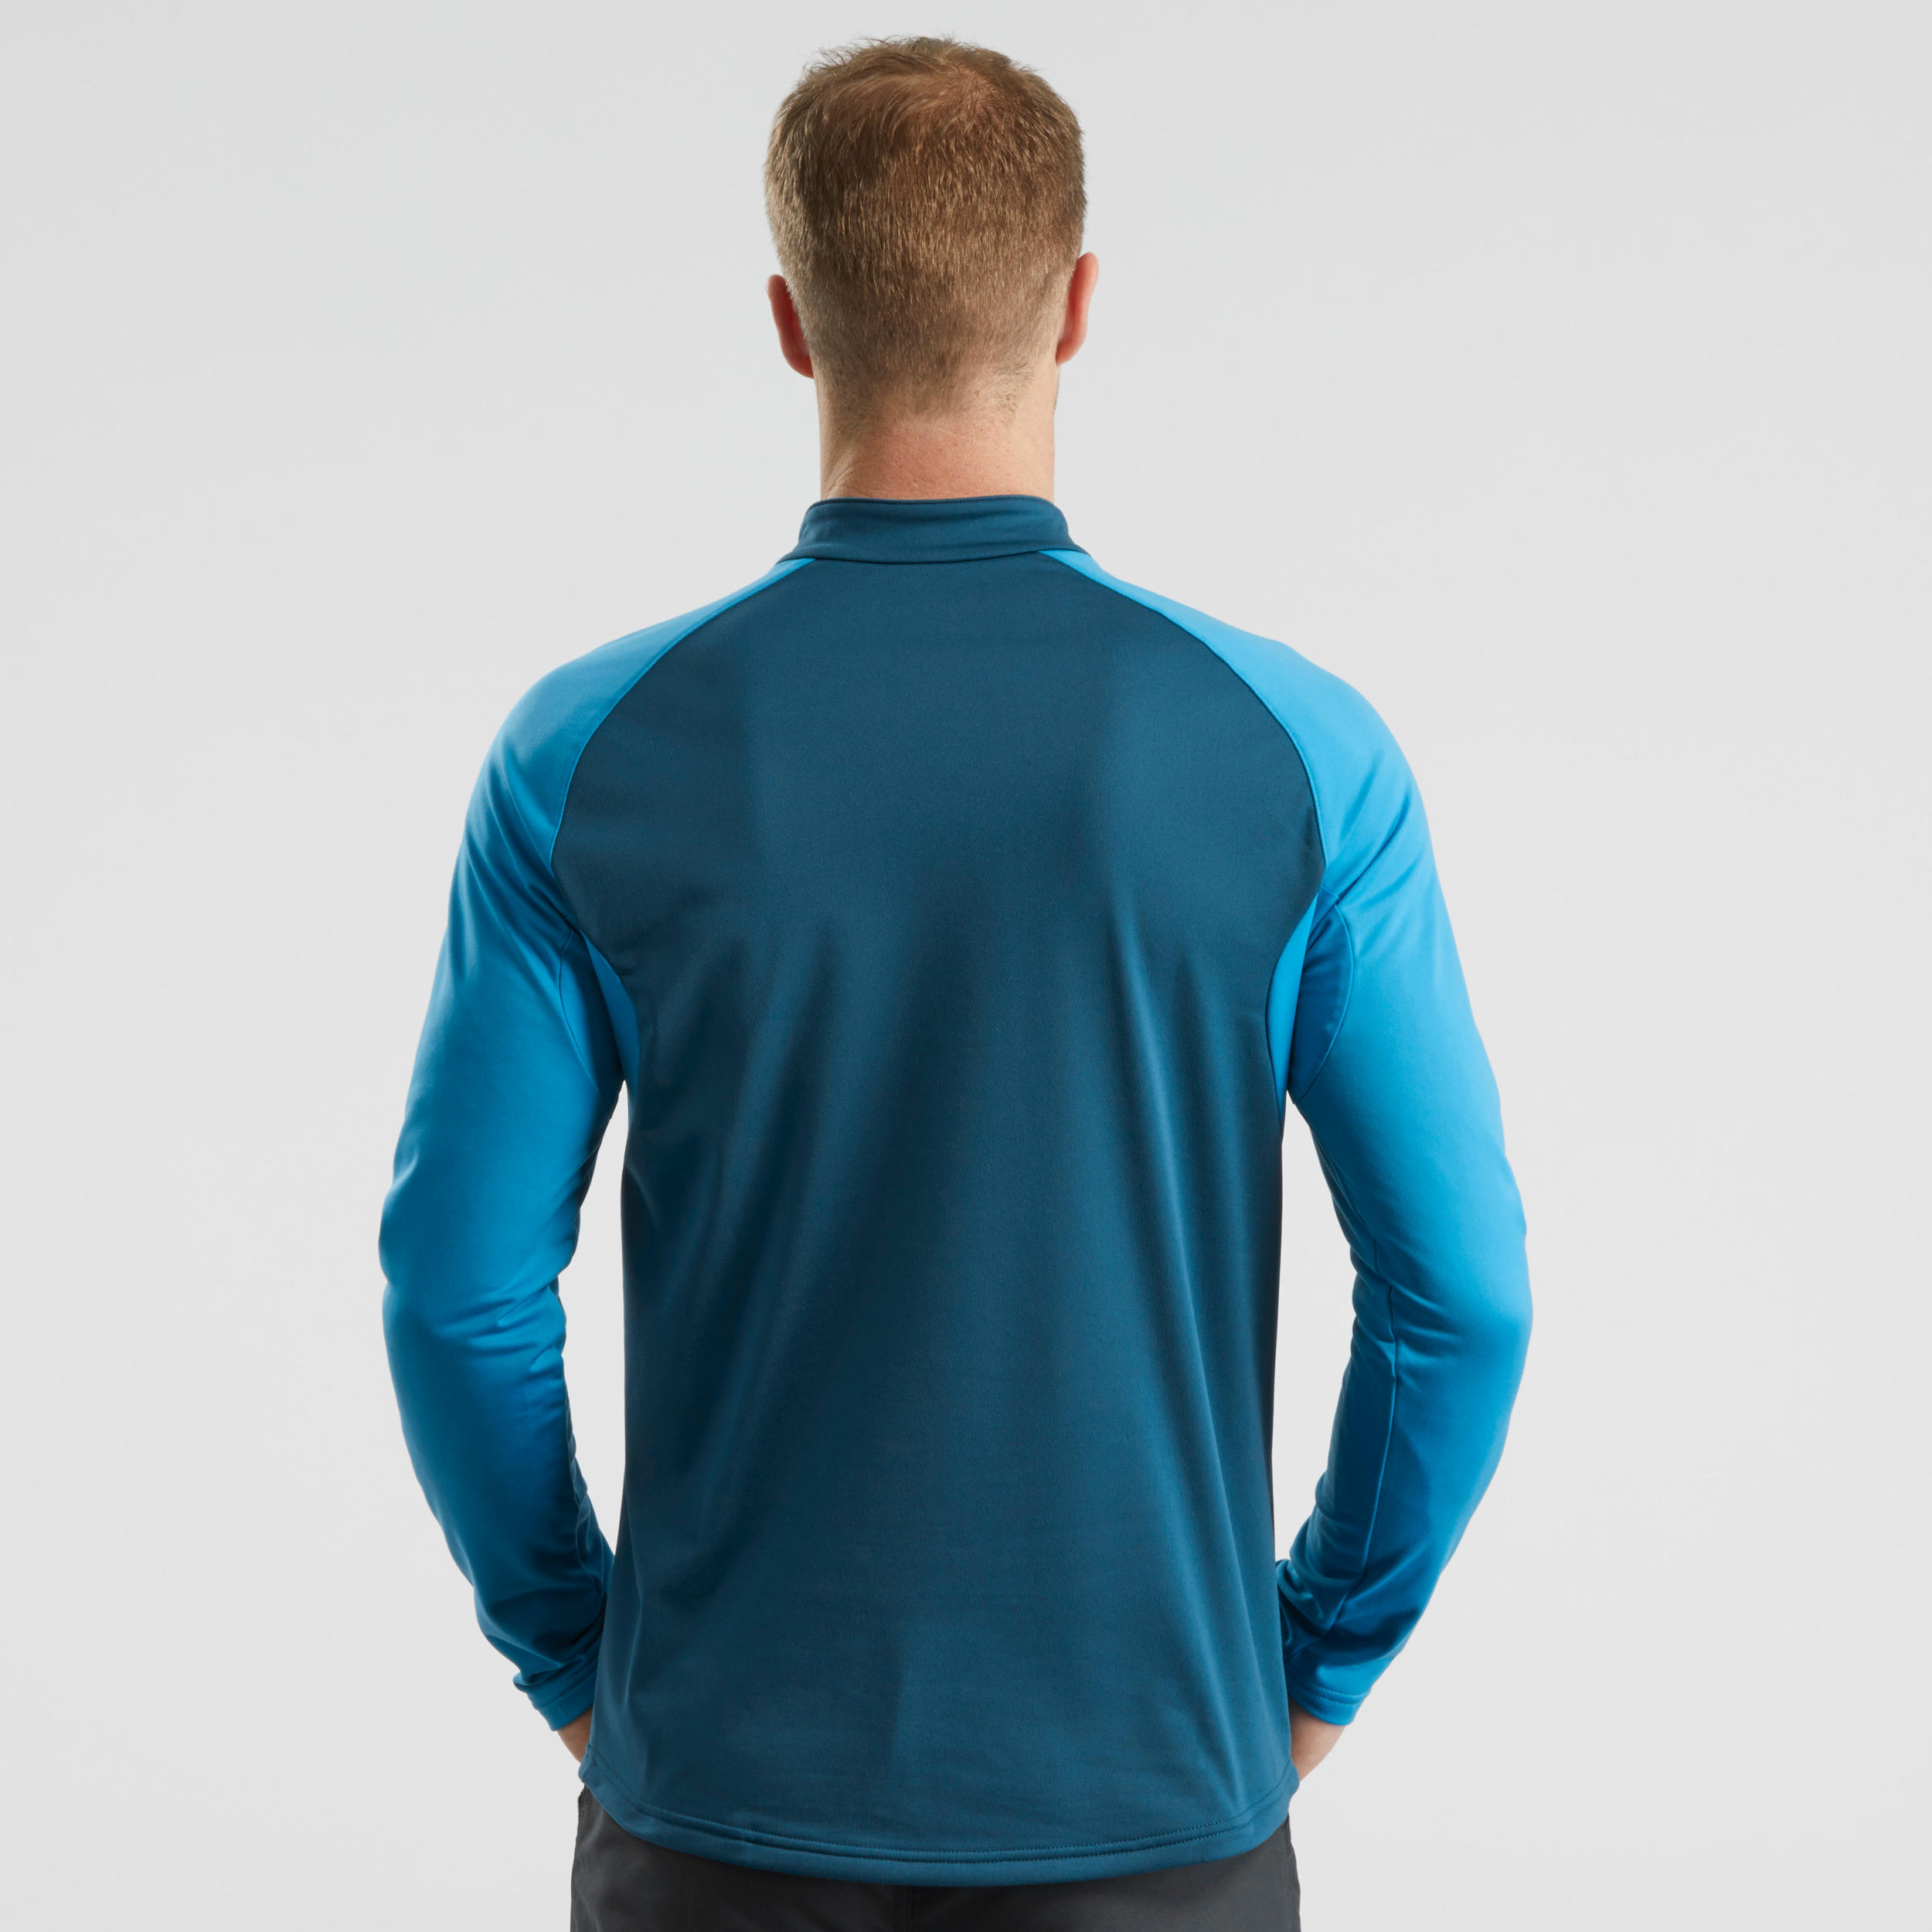 Men's hiking long-sleeved warm T-shirt - SH100 5/5